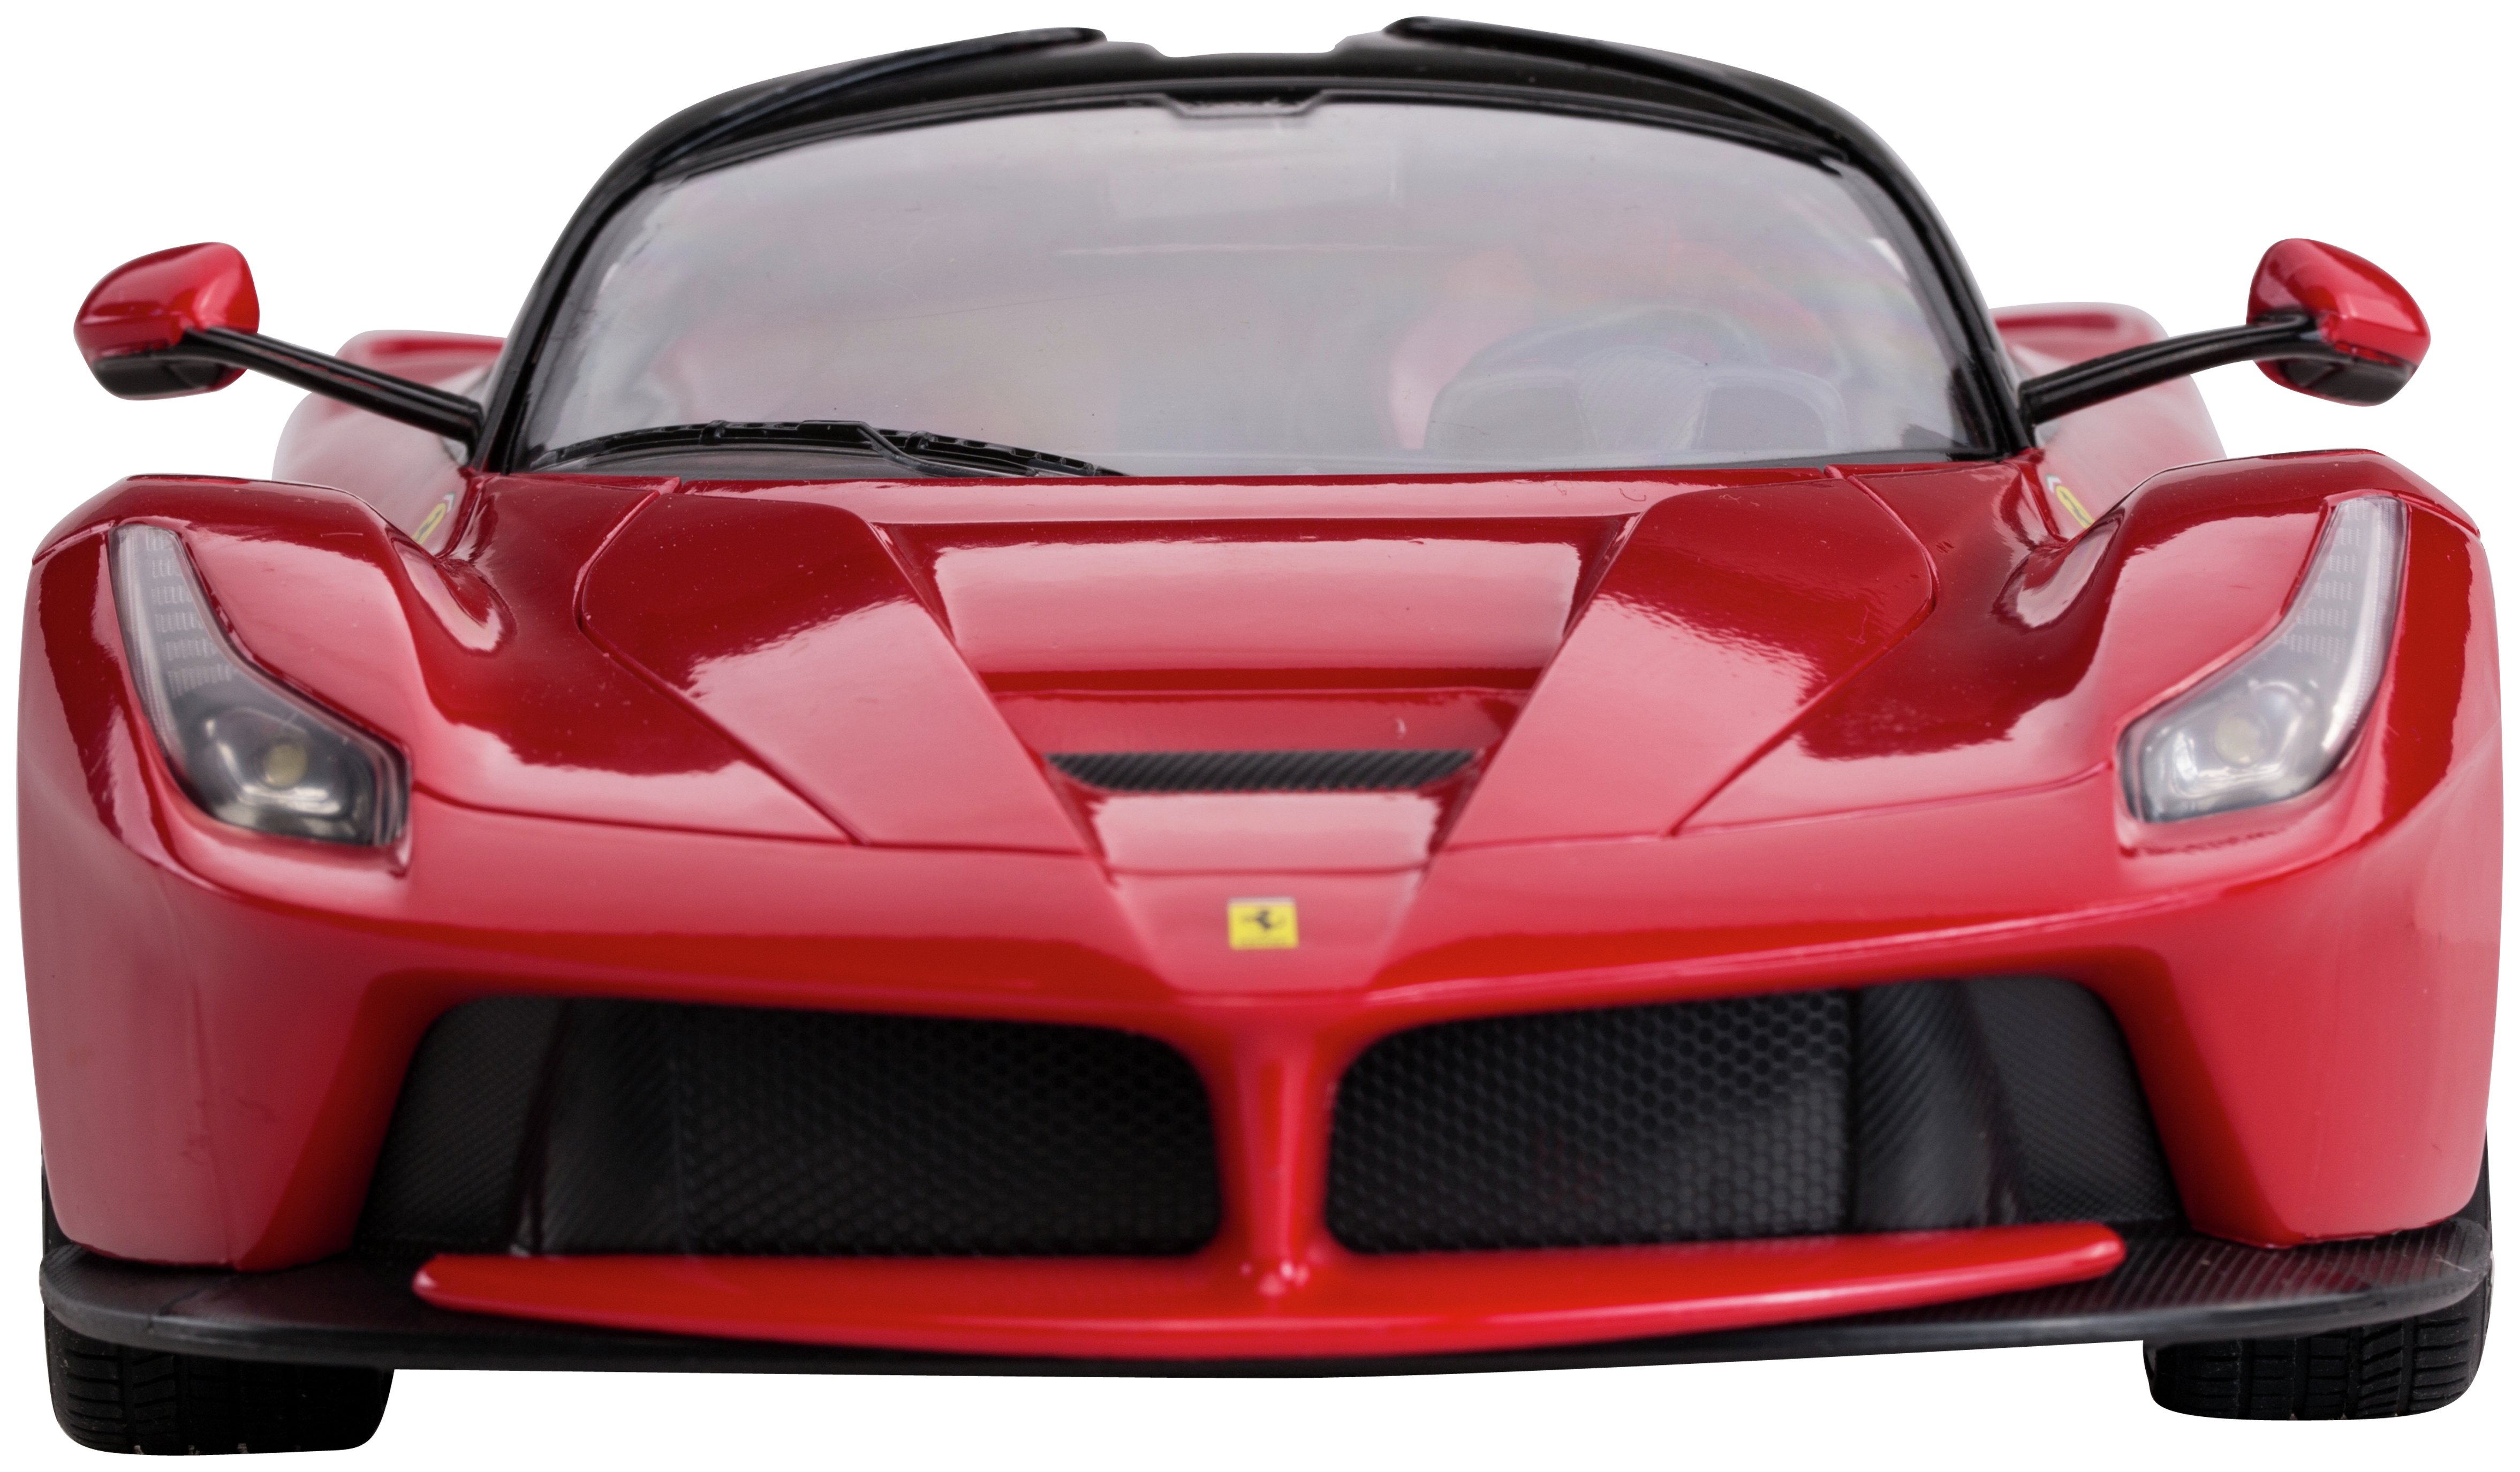 Rastar La Ferrari Light and Door Radio Controlled Car Review